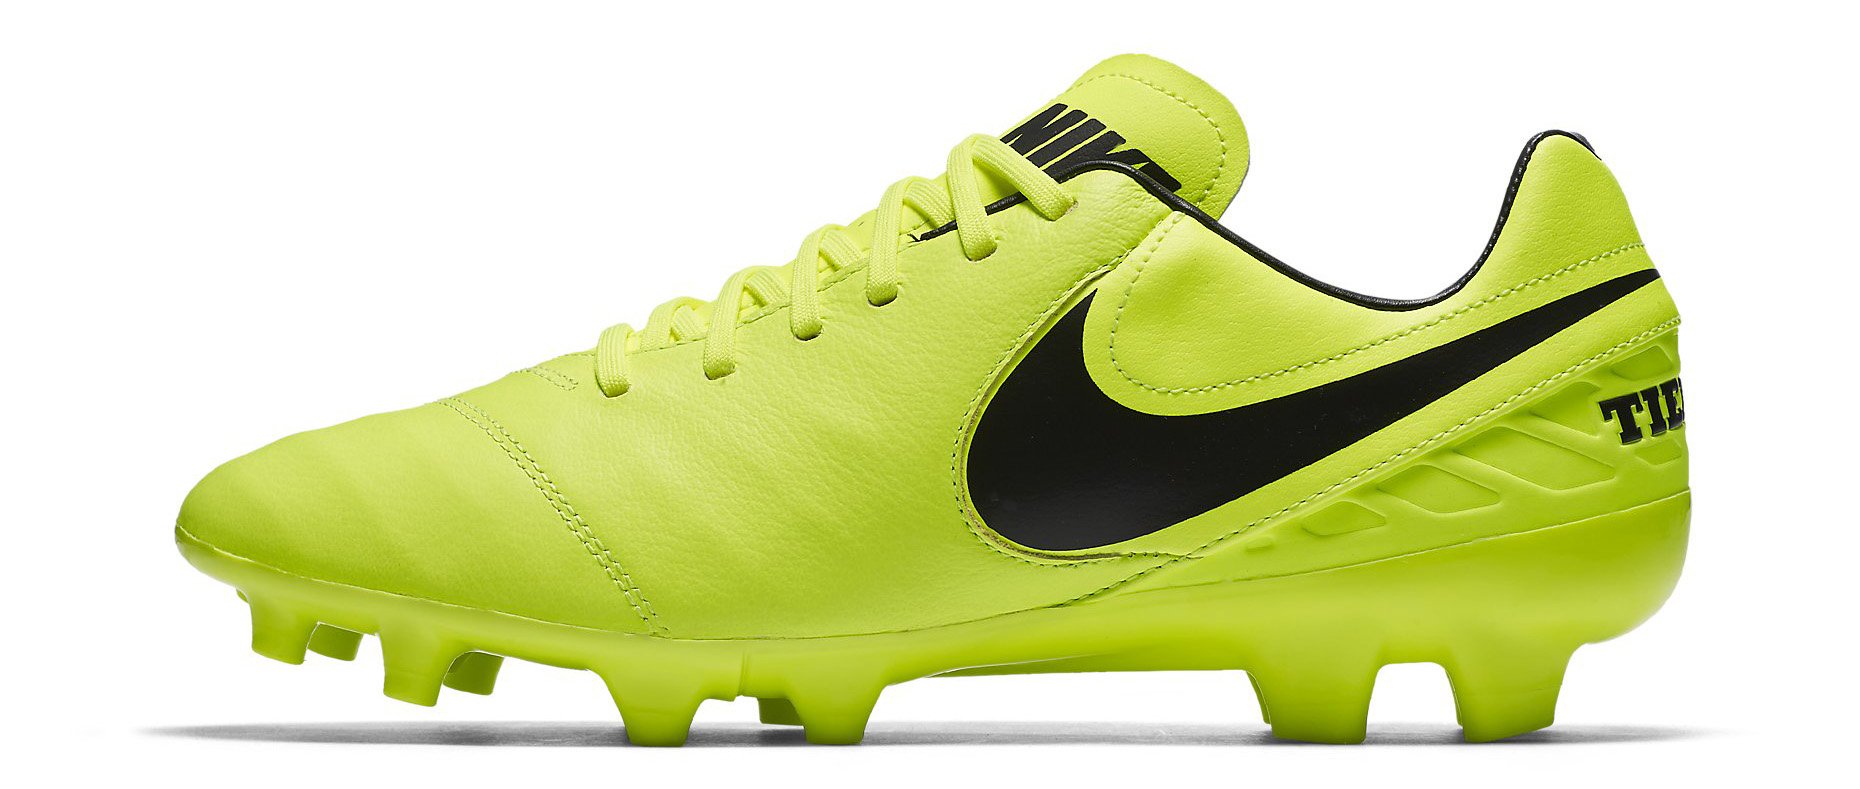 Football shoes Nike TIEMPO MYSTIC V FG - Top4Football.com